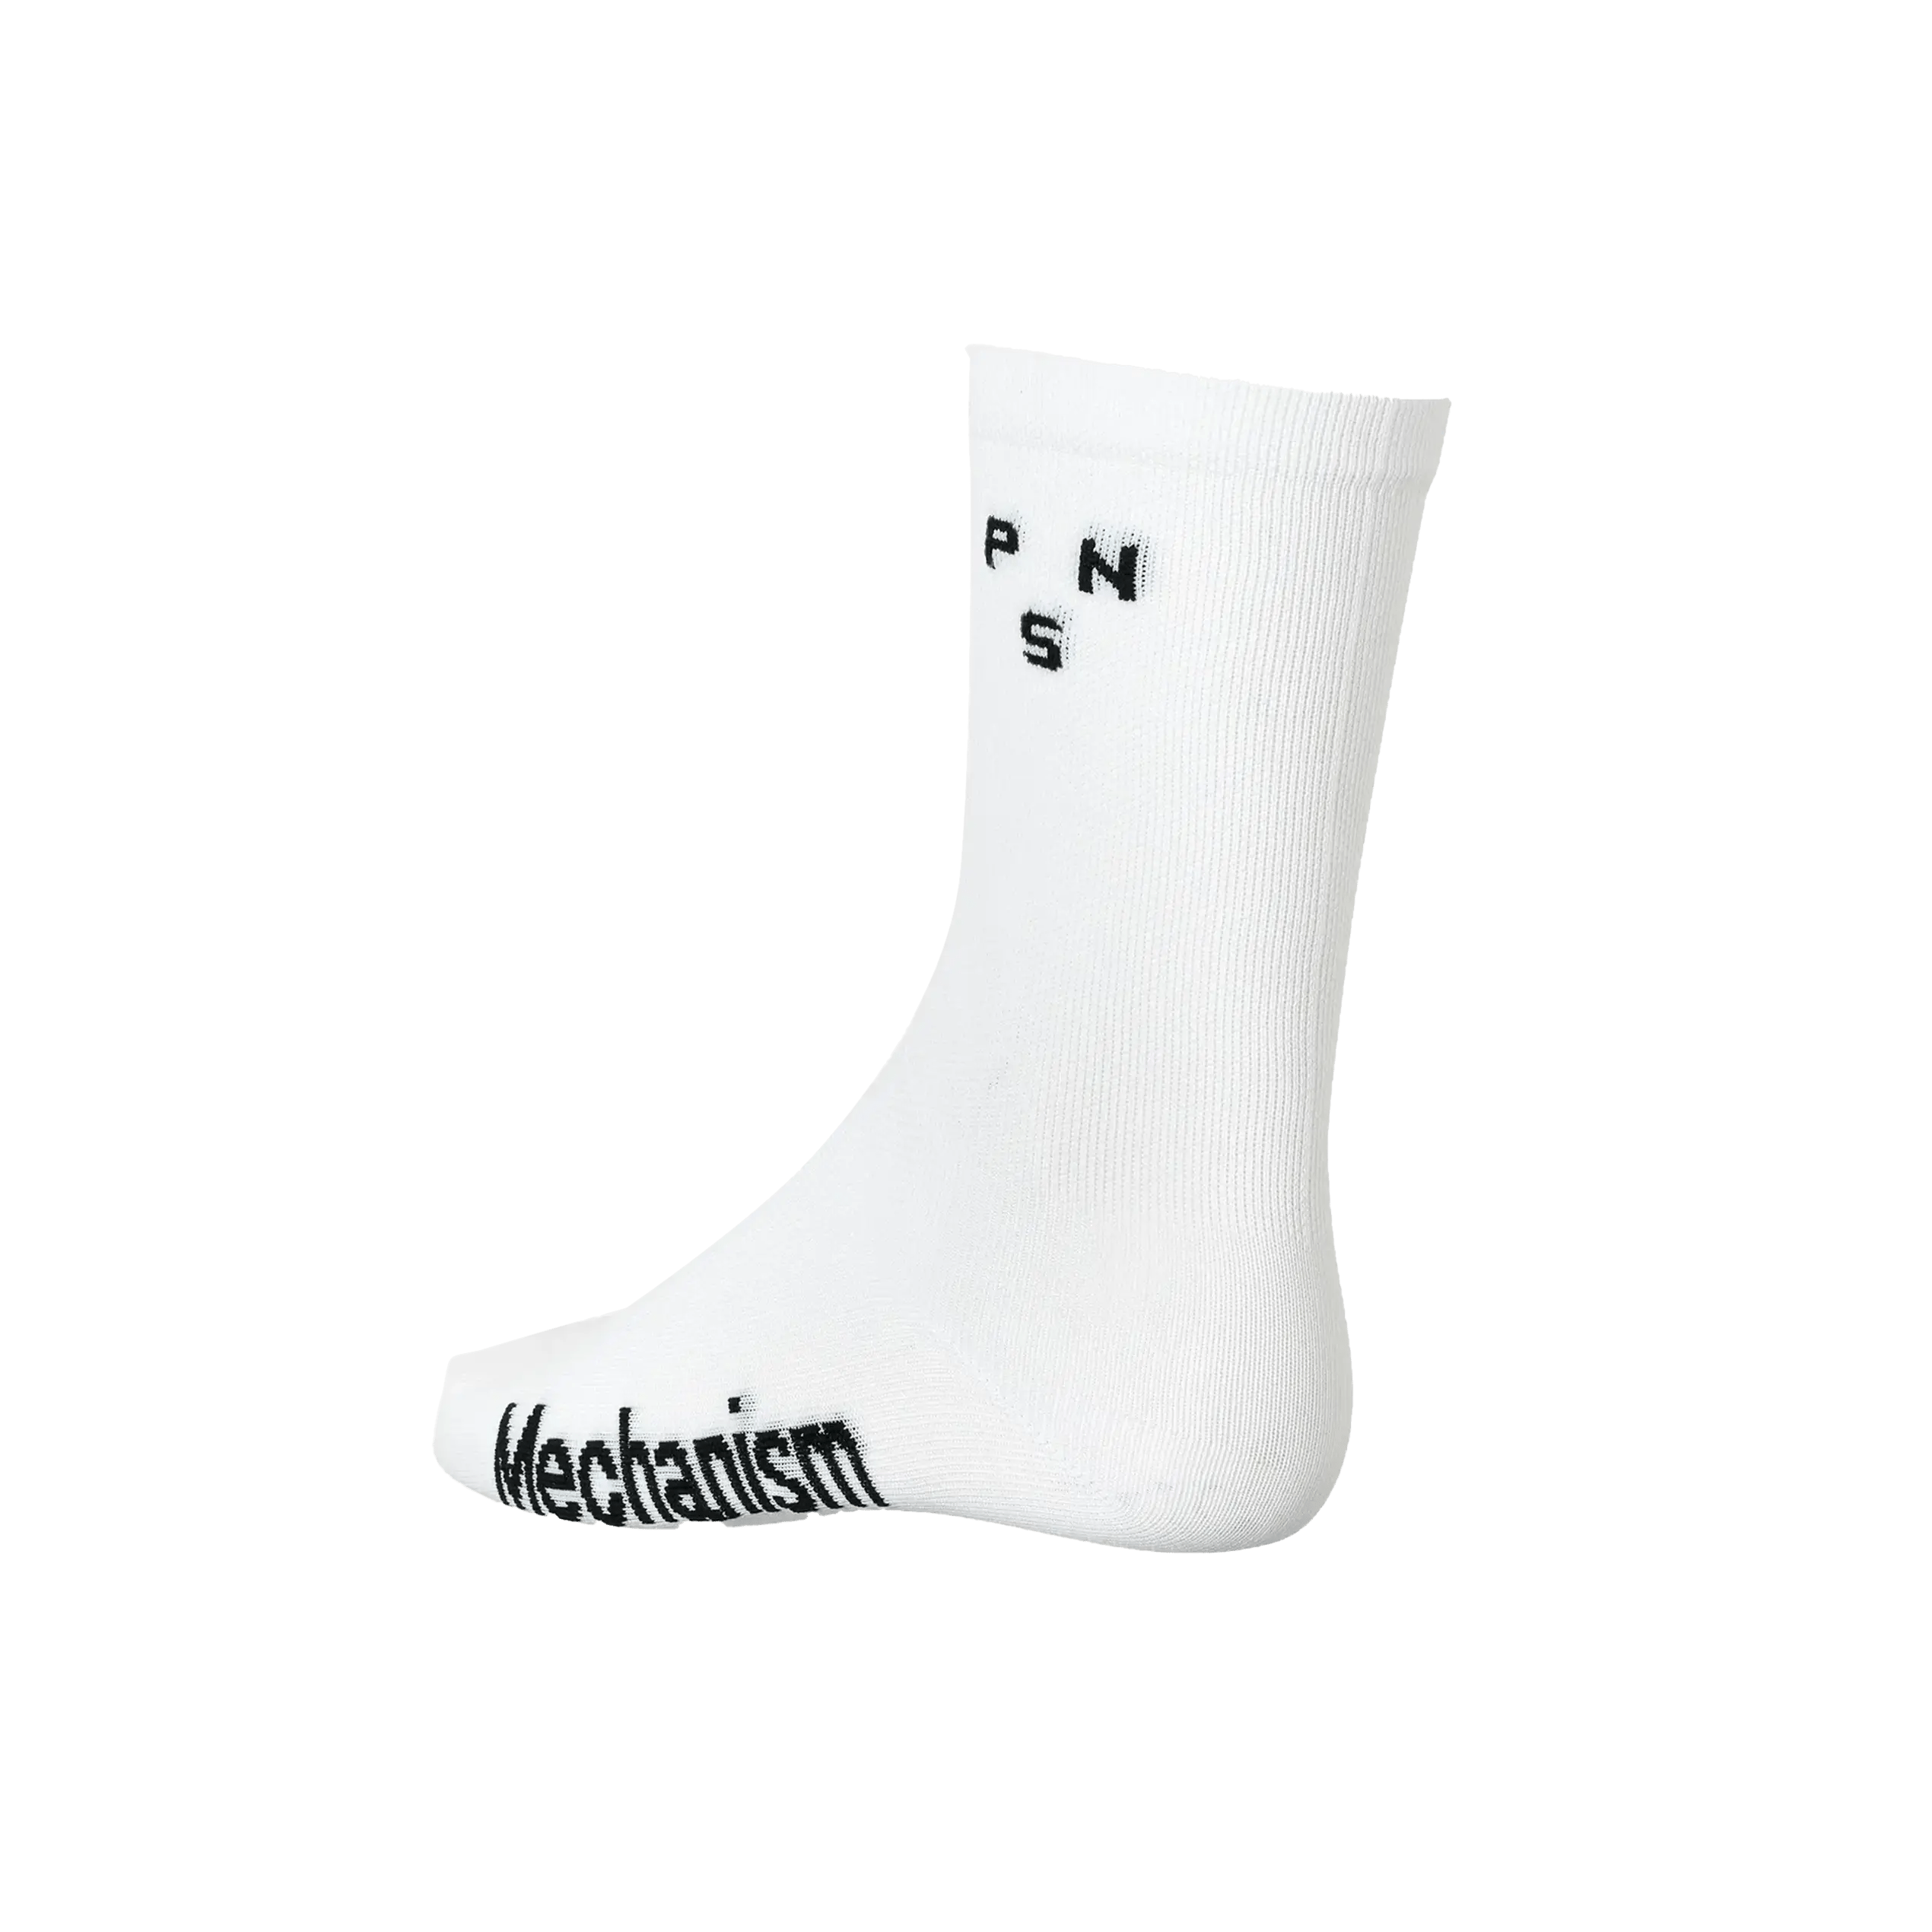 Mechanism Socks - White - Threshold Coffee